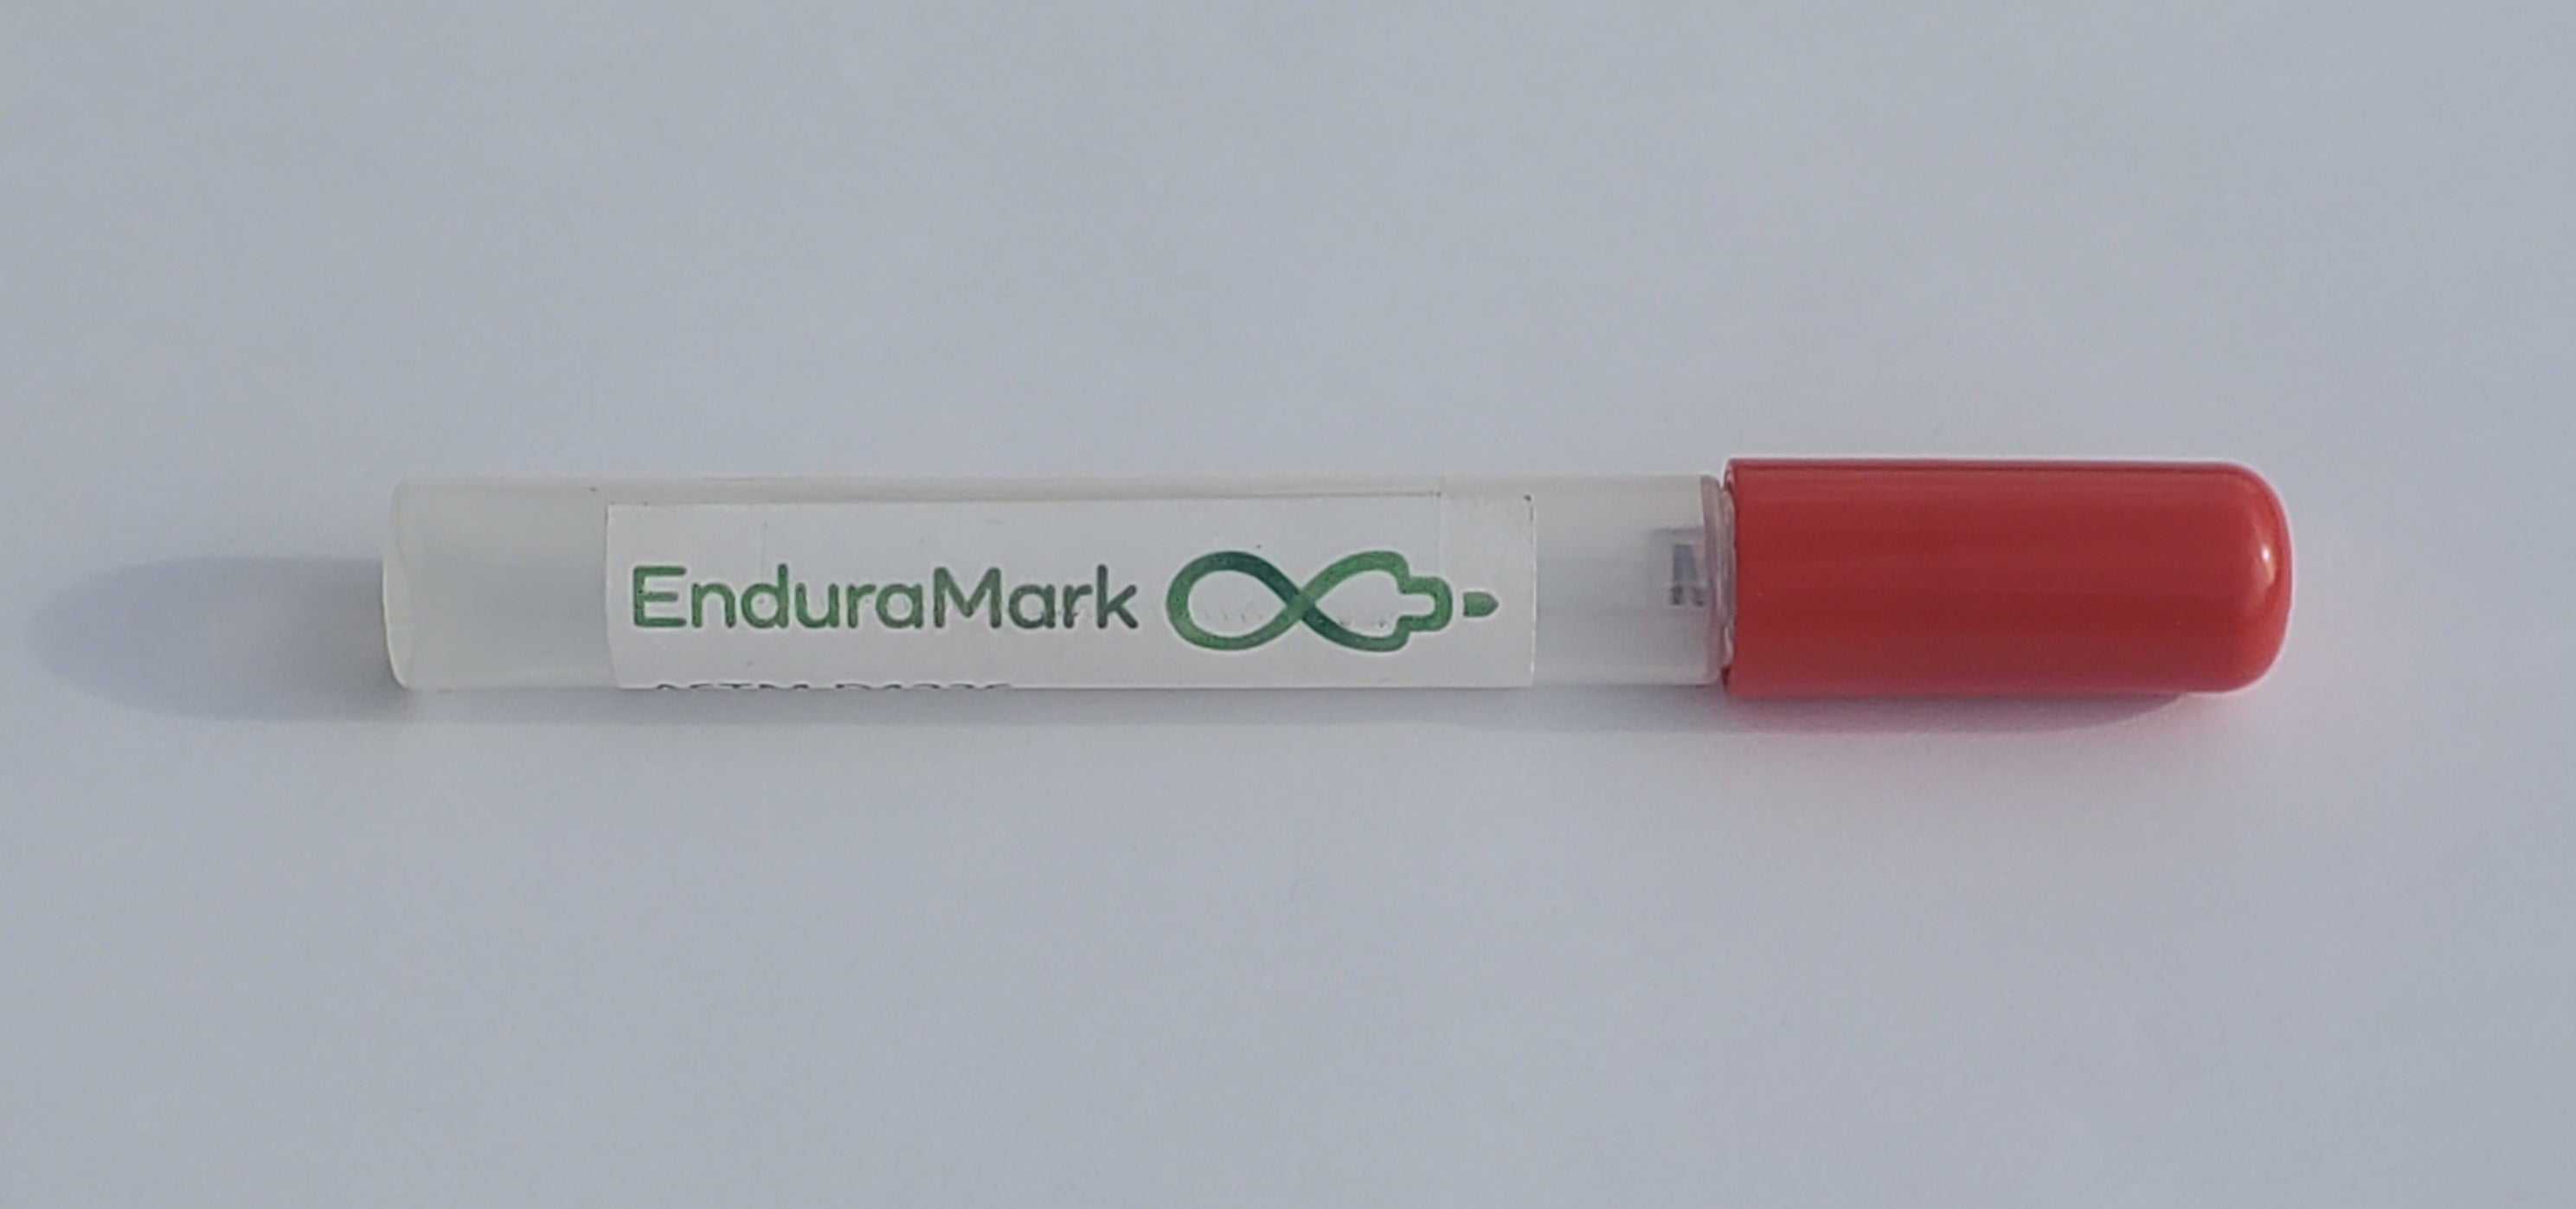 Enduramark The CO<sub>2</sub> Laser Marking Spray for professionals